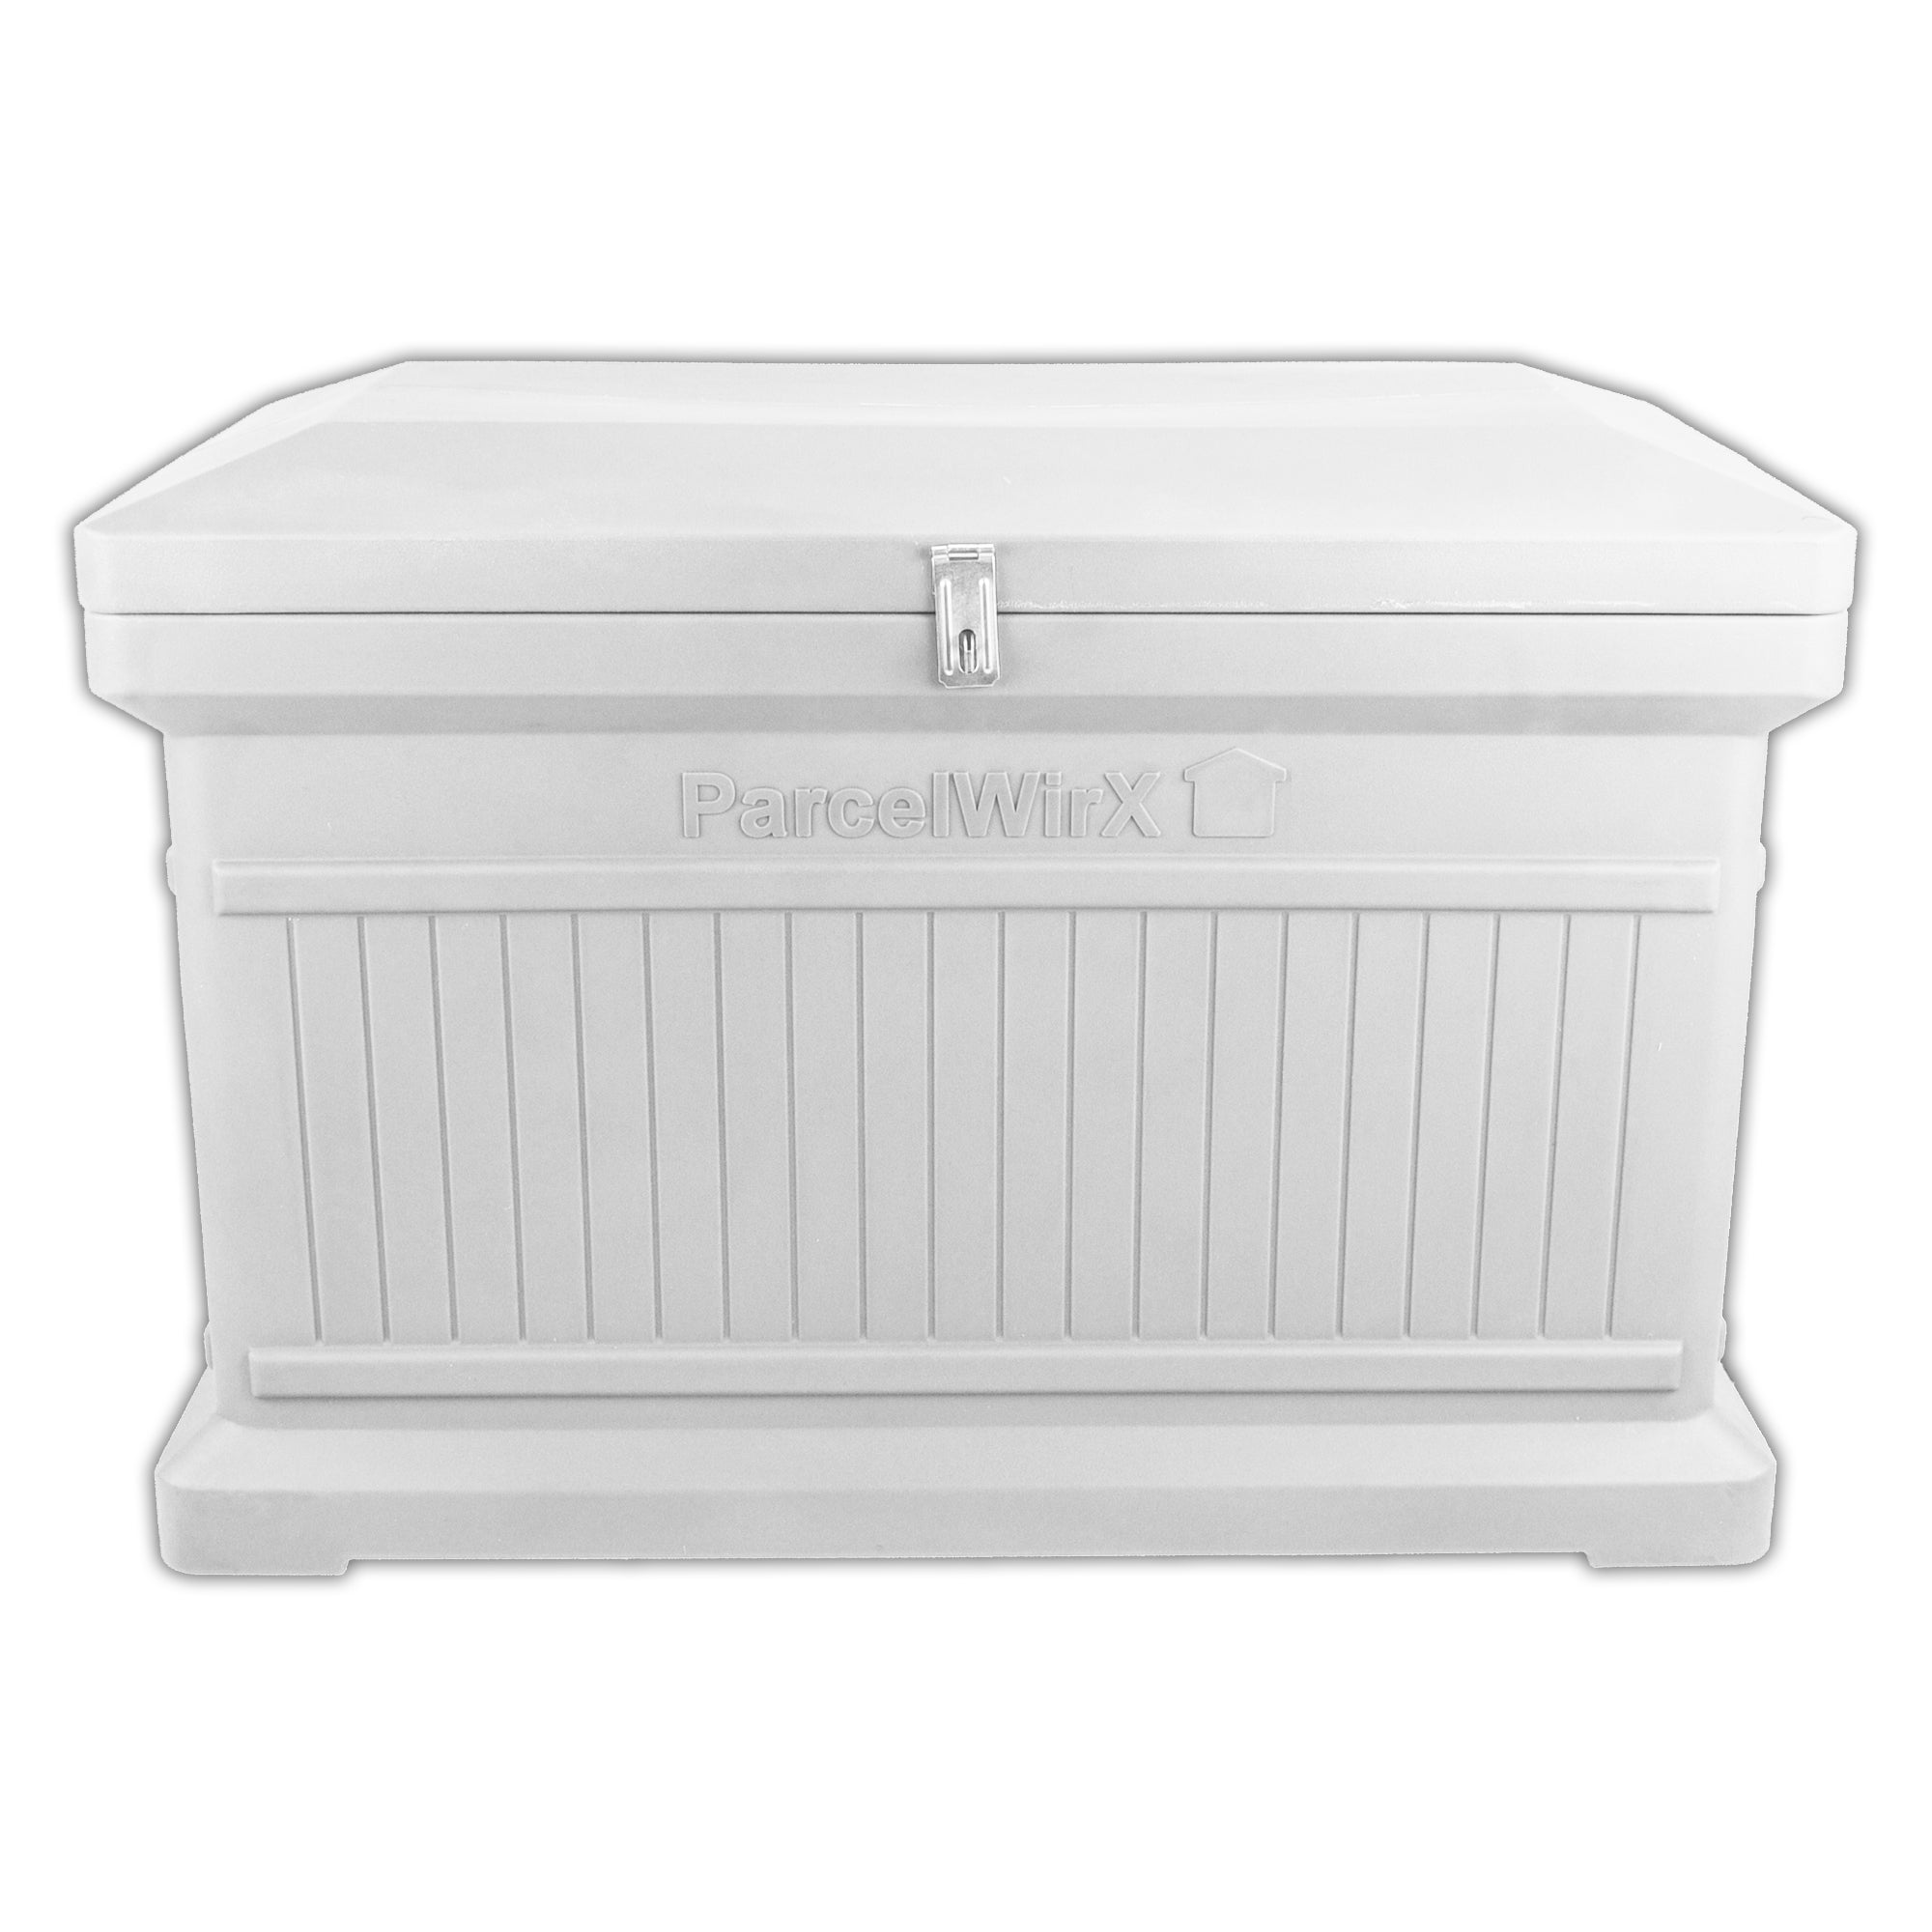 Slate Grey ParcelWirx horizontal premium dropbox on a white background